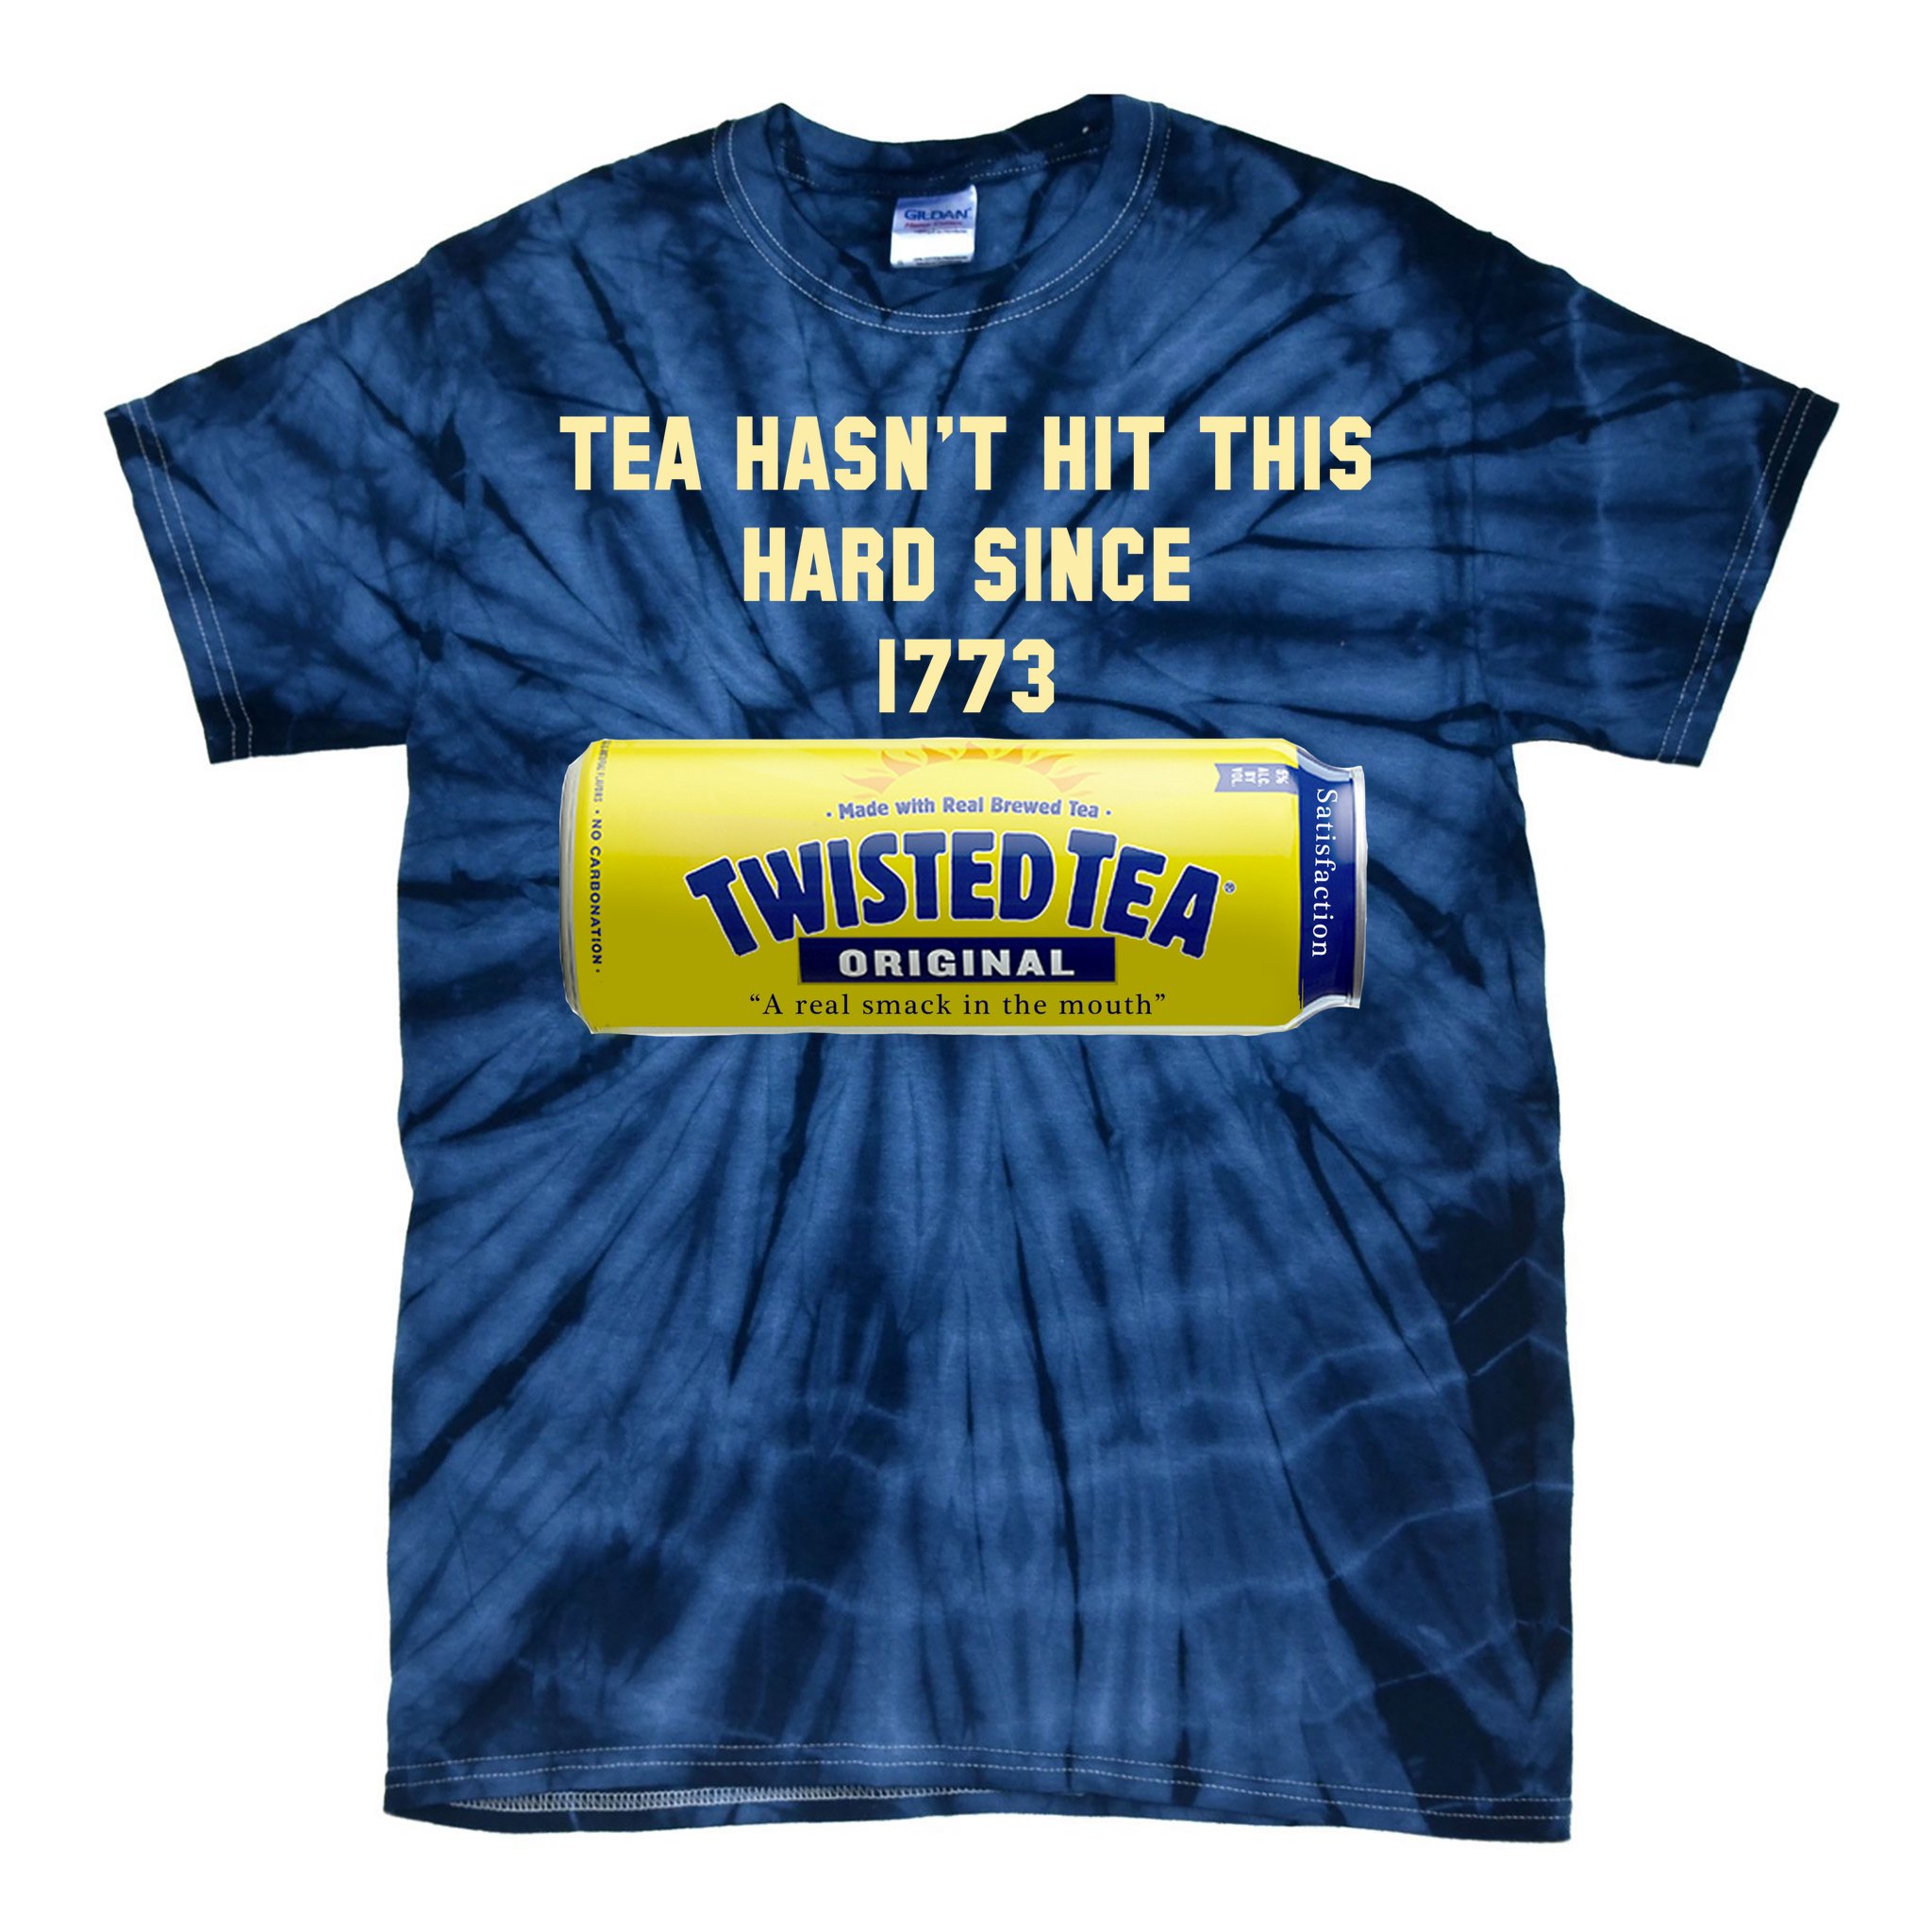 Twisted Tea Hasn't Hit This Hard Since 1773 Tie-Dye T-Shirt